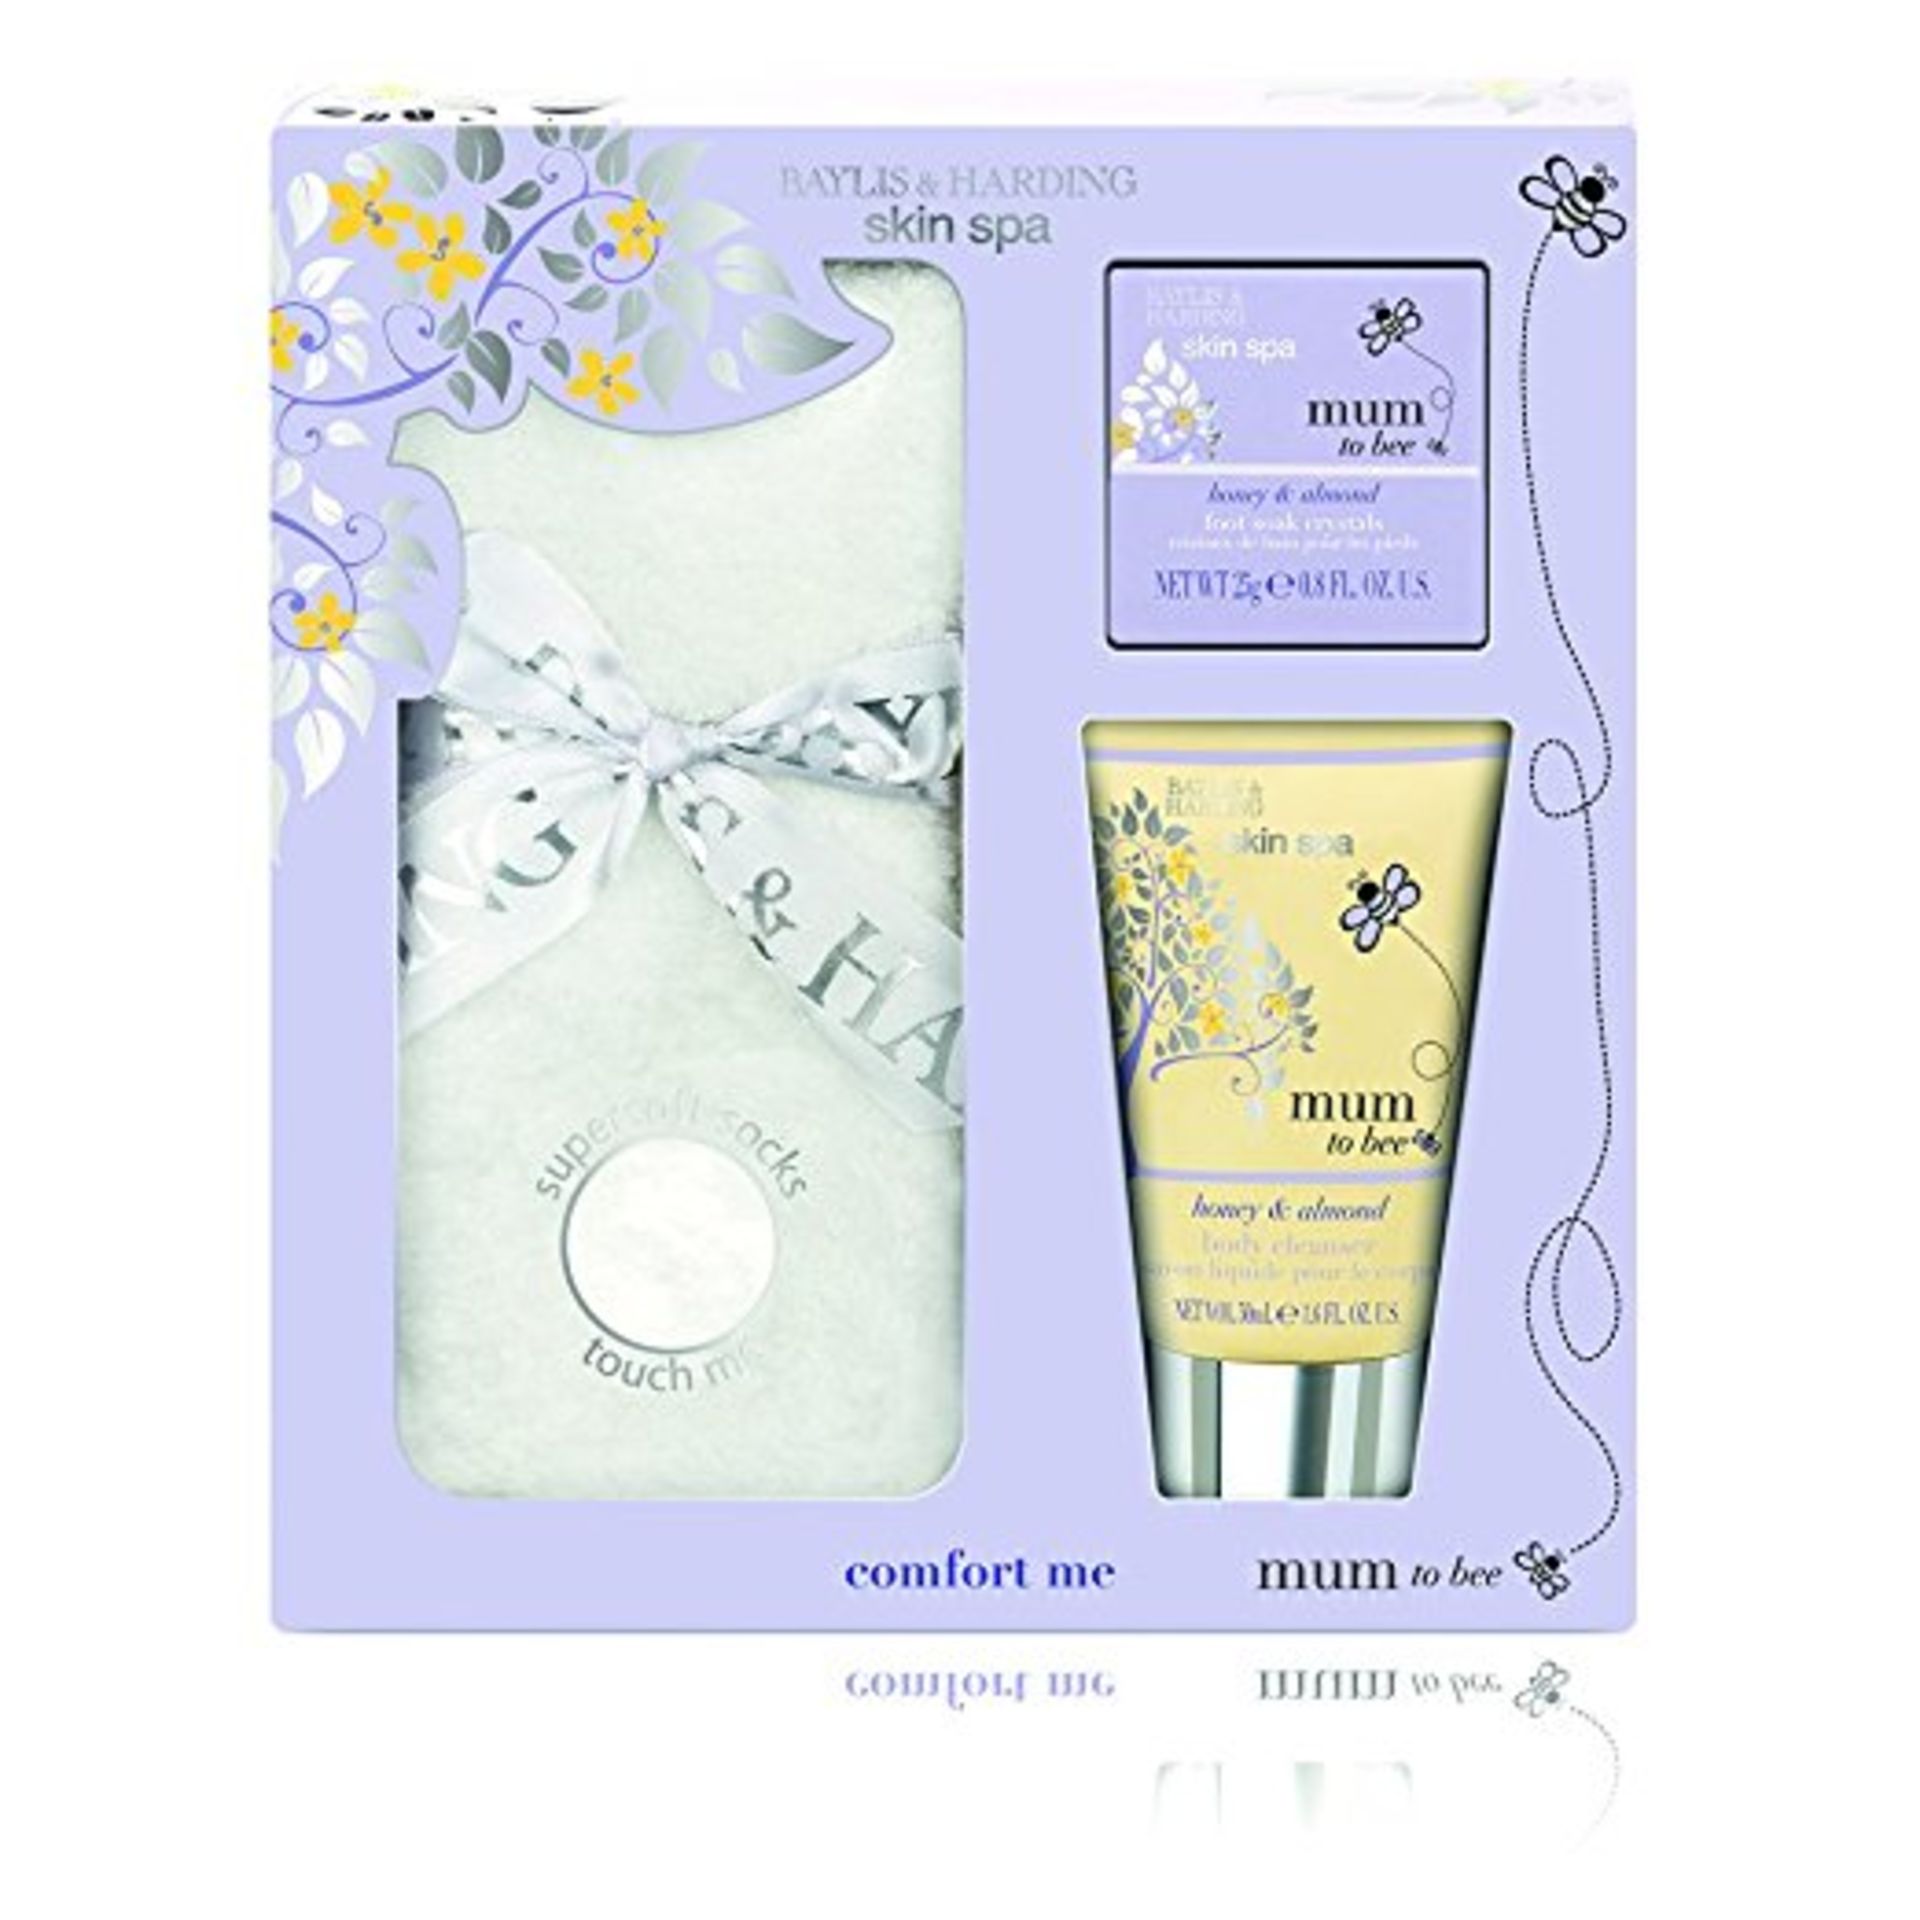 V Brand New Baylis & Harding Skin Spa "Comfort Me" Supersoft Socks + Honey & Almond Gift Set Inc